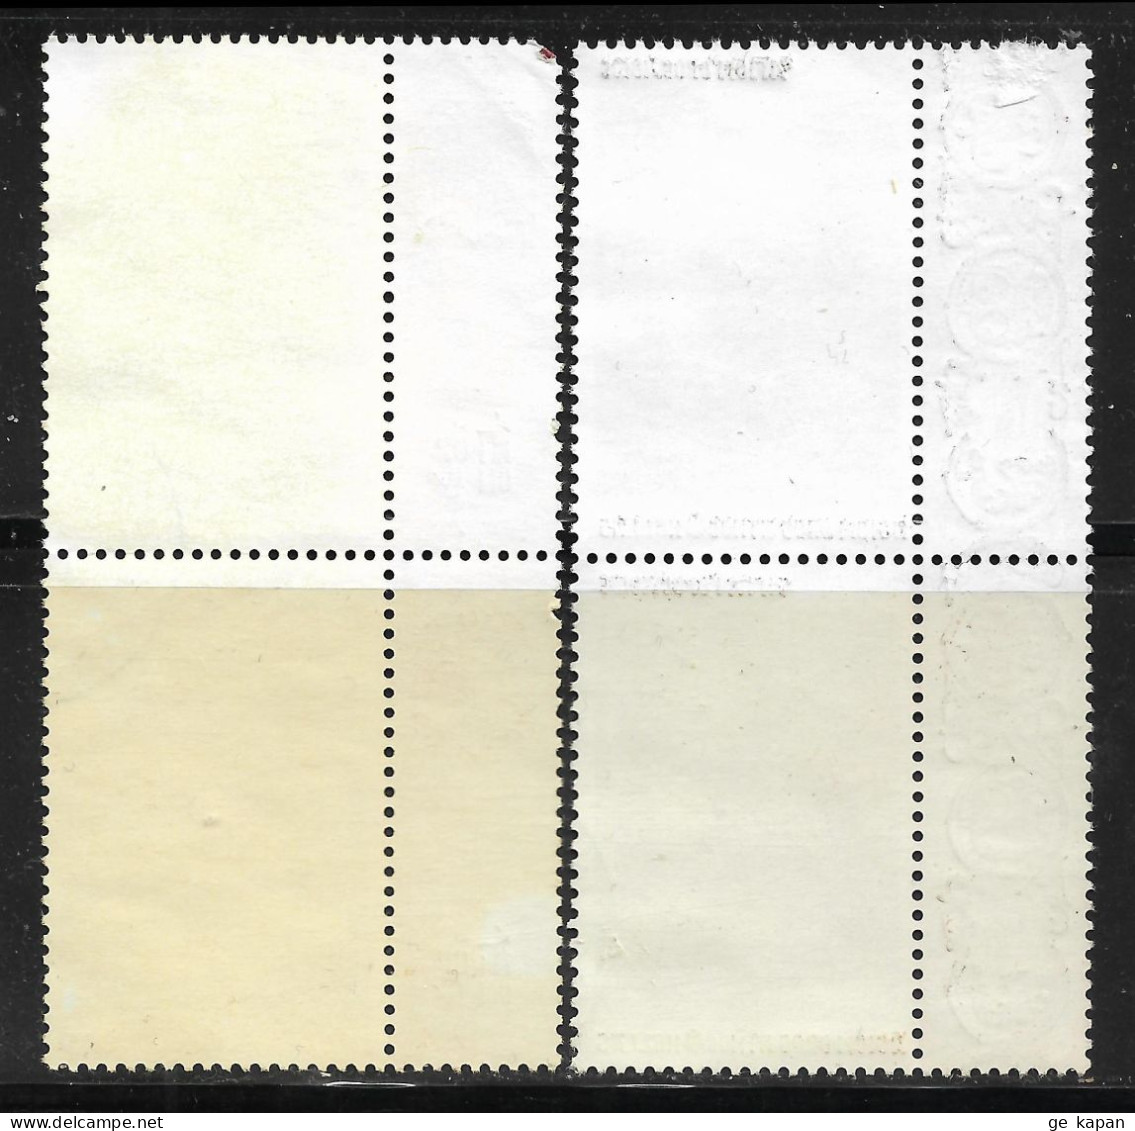 2008,2009 GREECE Mount Athos Set Of 2 Used Pair Stamps (Scott # 3,39) CV $10.50 - Usati